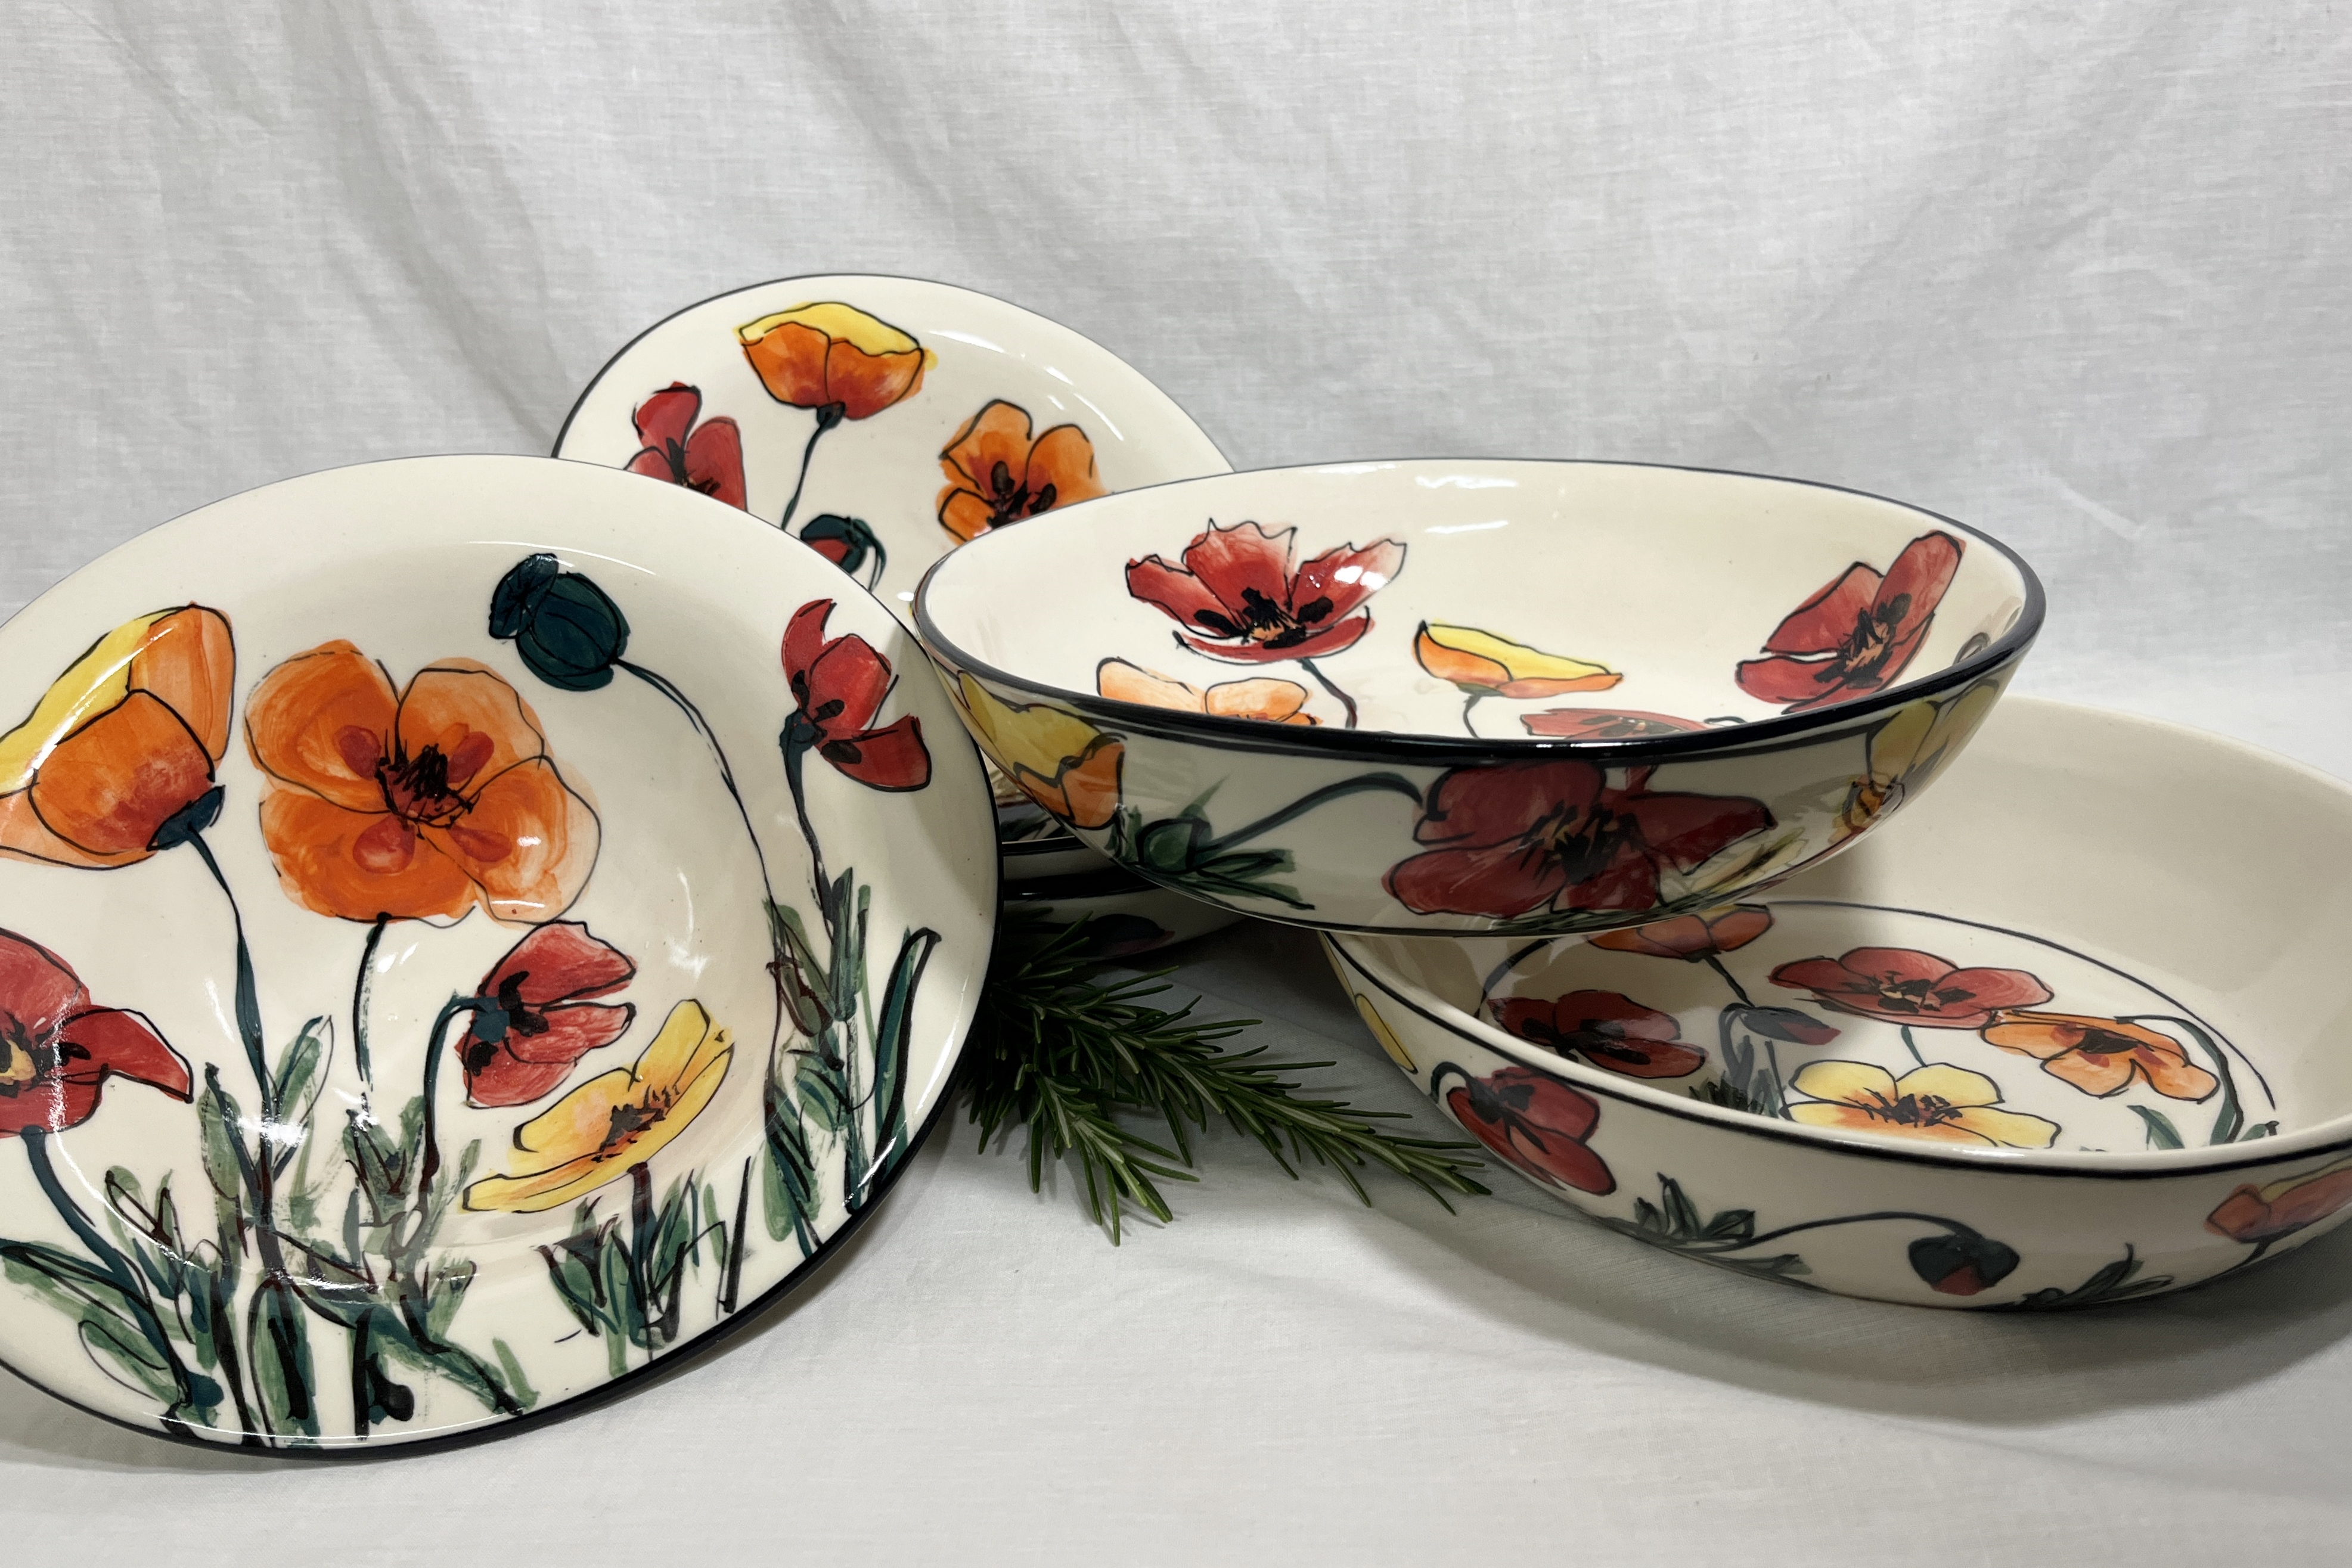 Mary-lou Pittard poppy bowls Australian ceramic artist Town & Country Gallery Yarragon Gippsland